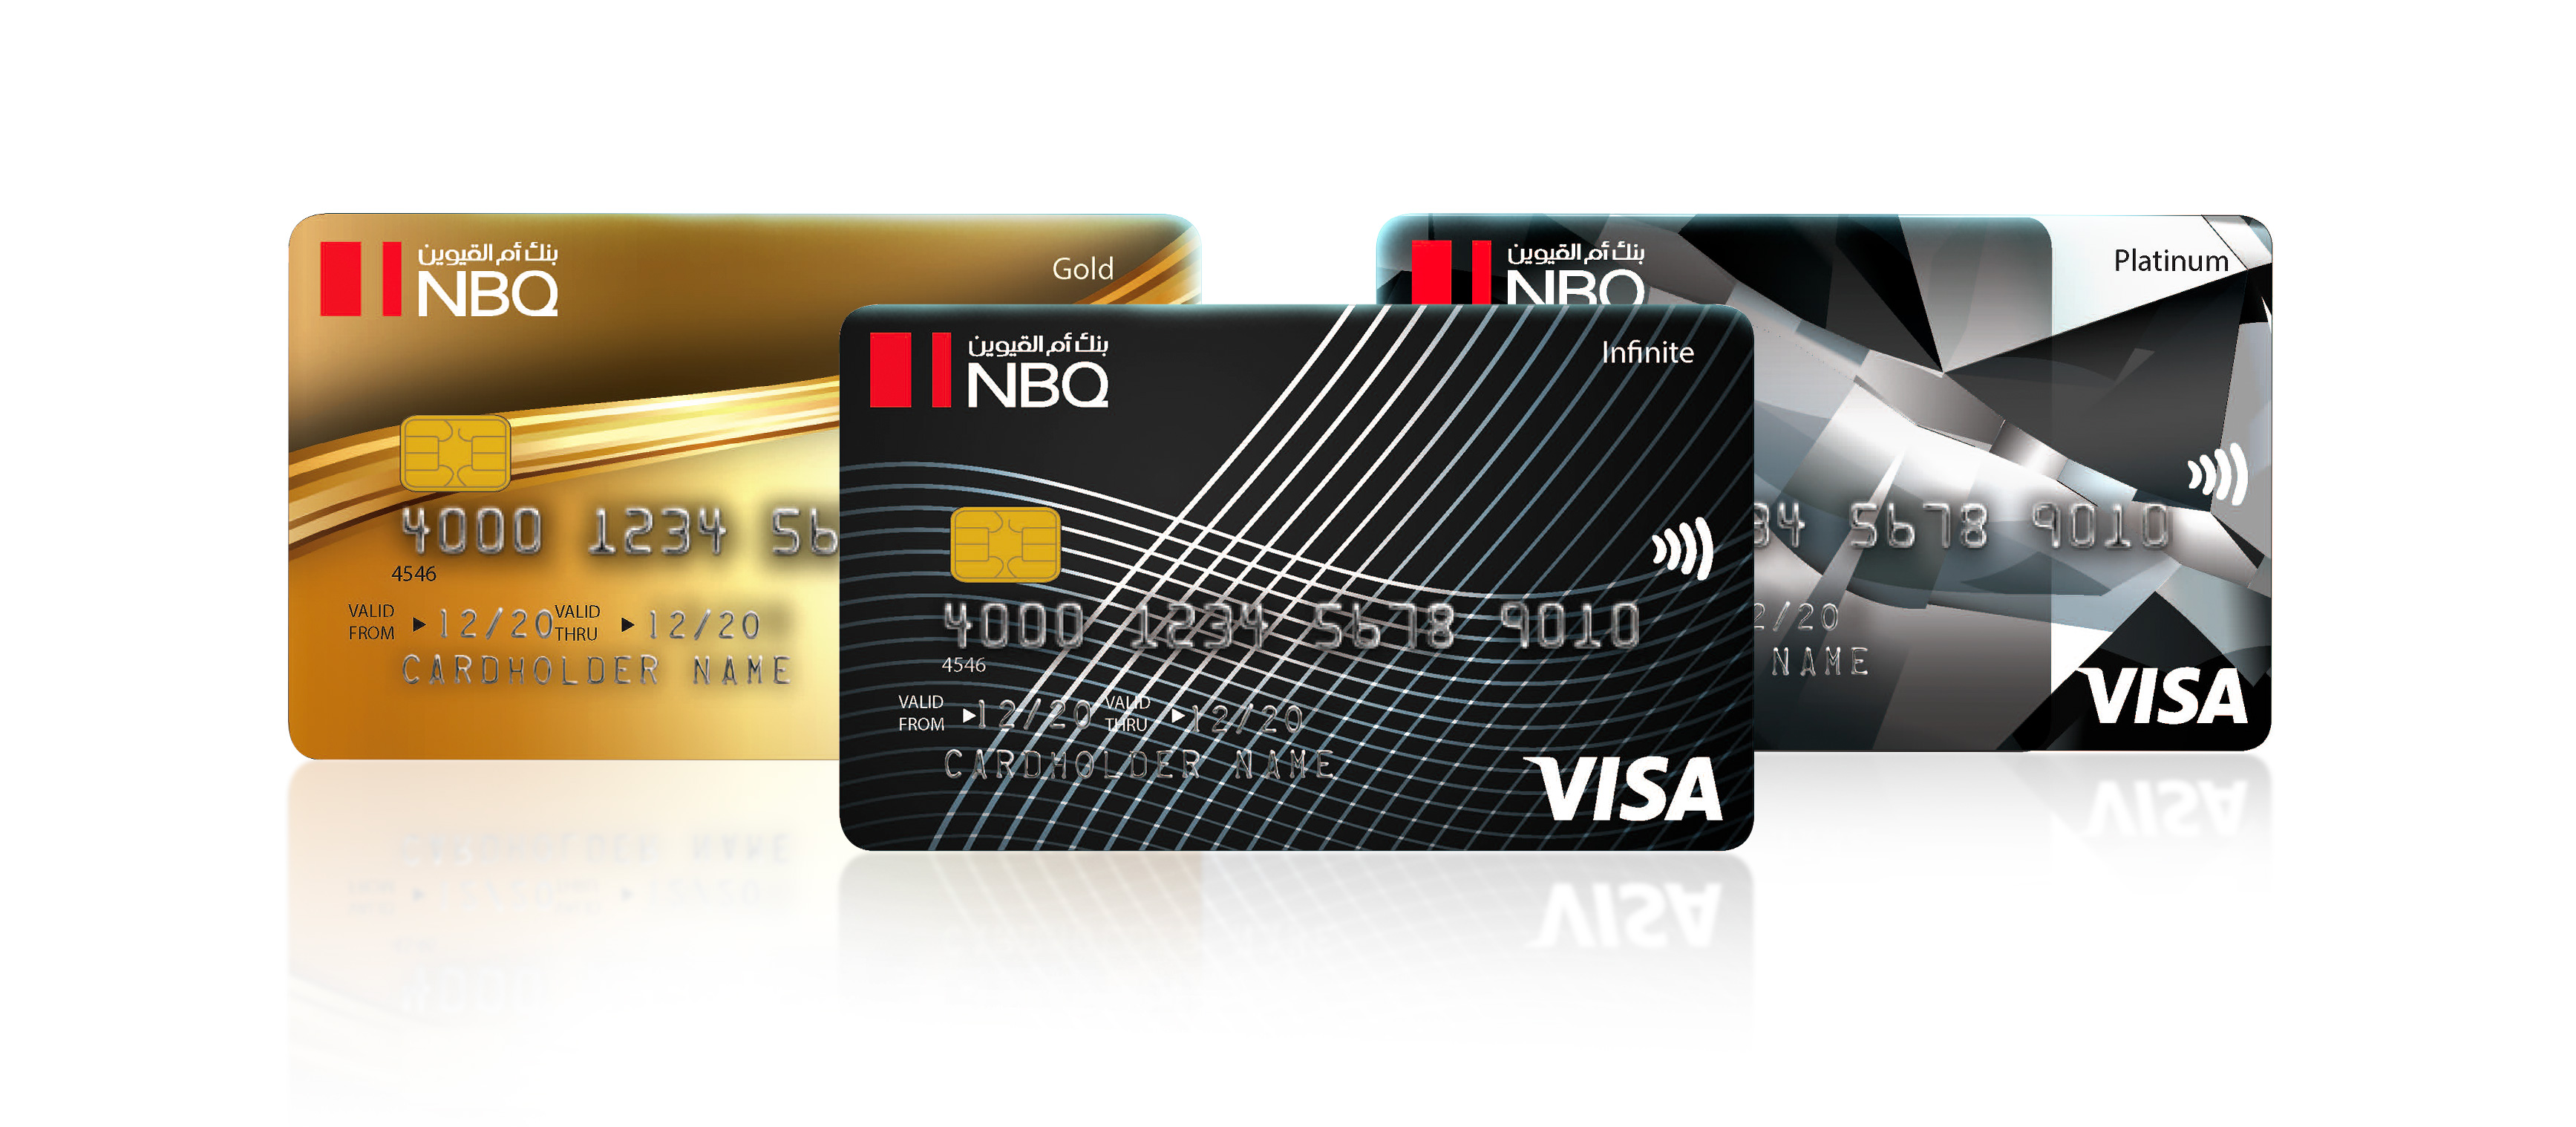 NBQ Cards